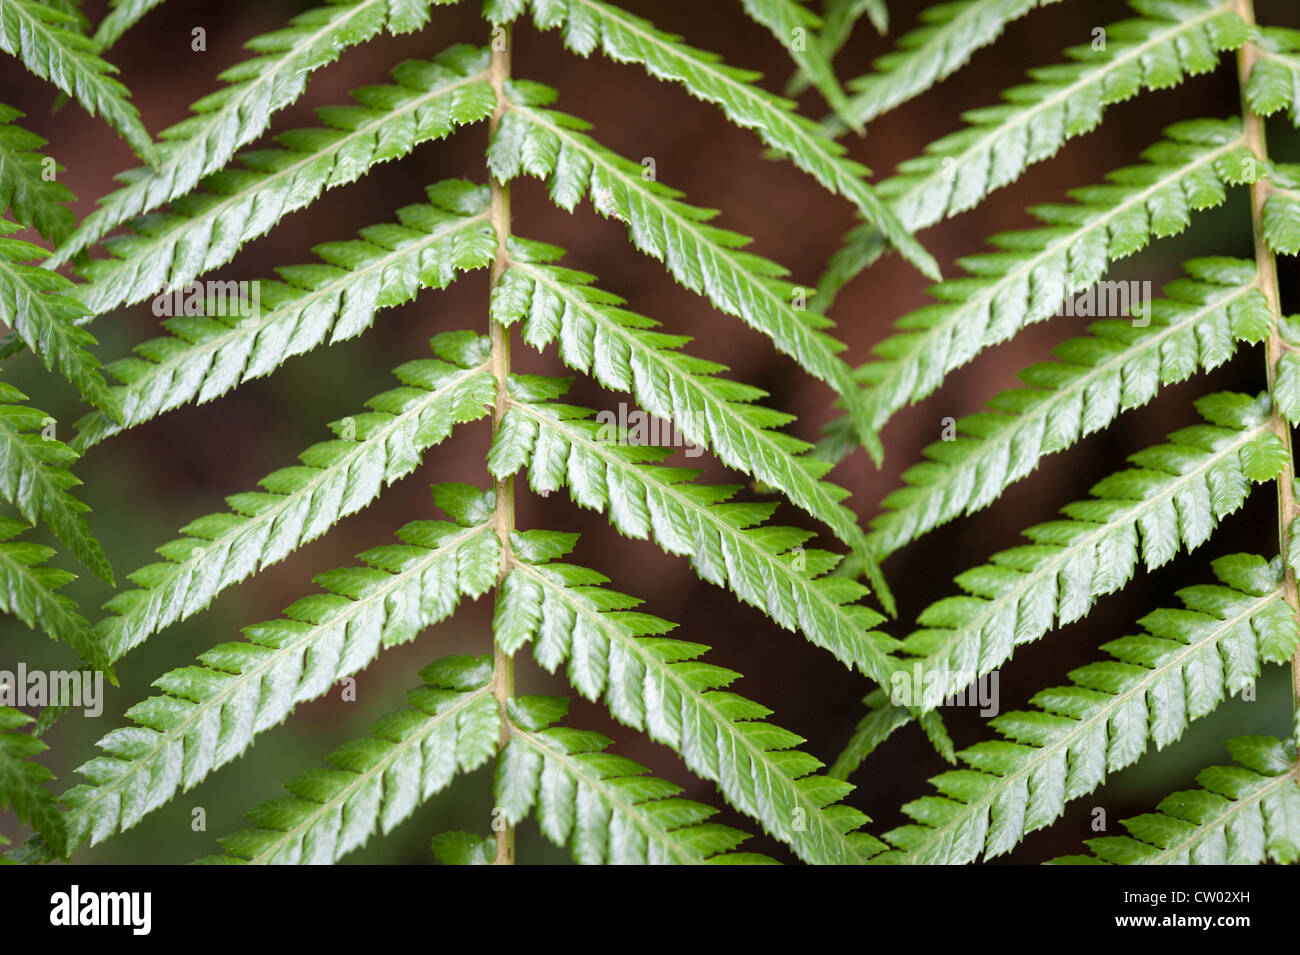 Fern leaves showing herring bone pattern close up. Stock Photo